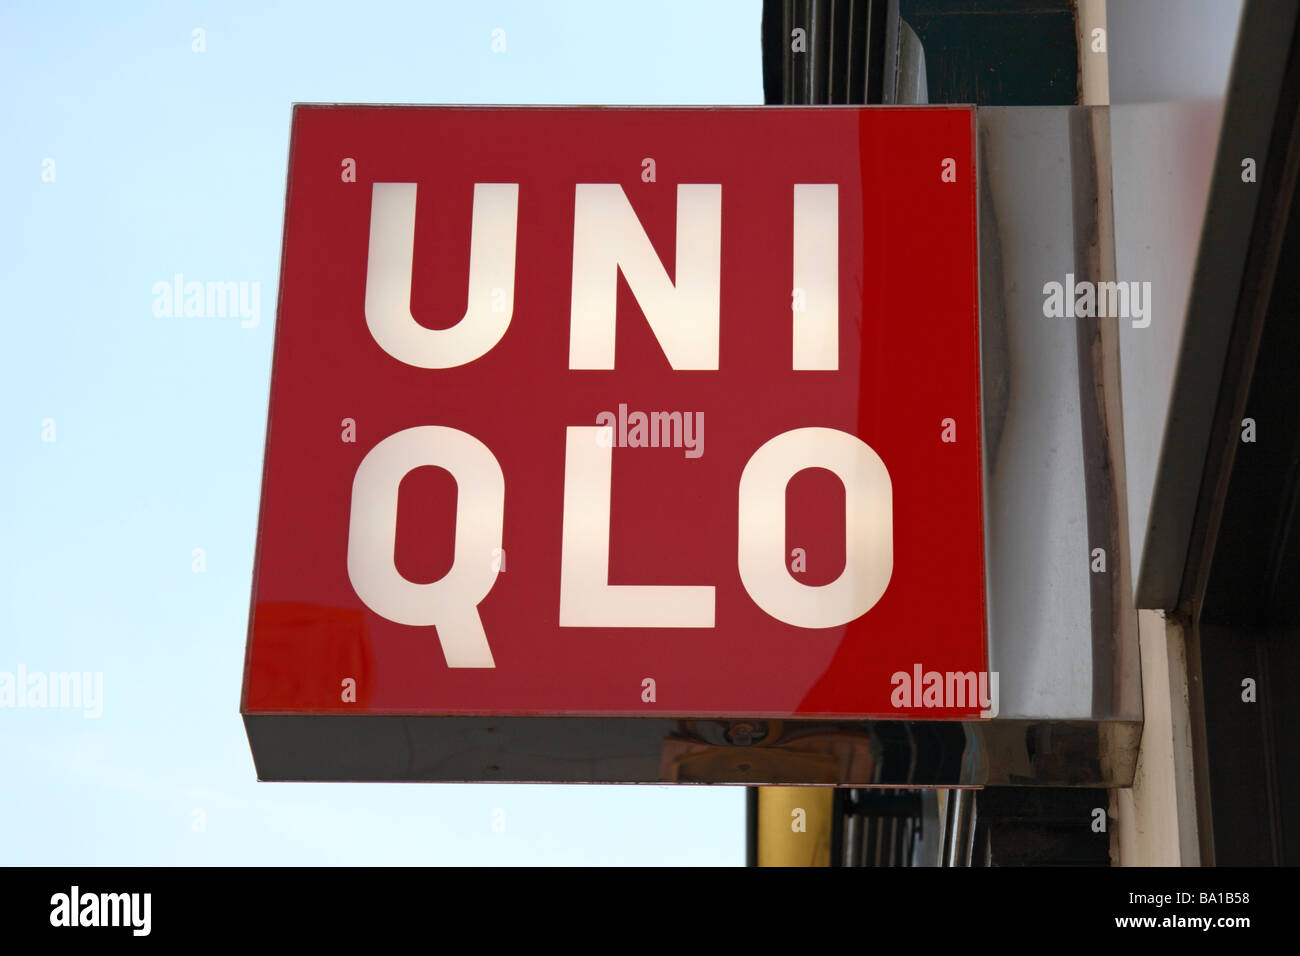 Uniqlo shop -Fotos und -Bildmaterial in hoher Auflösung – Alamy